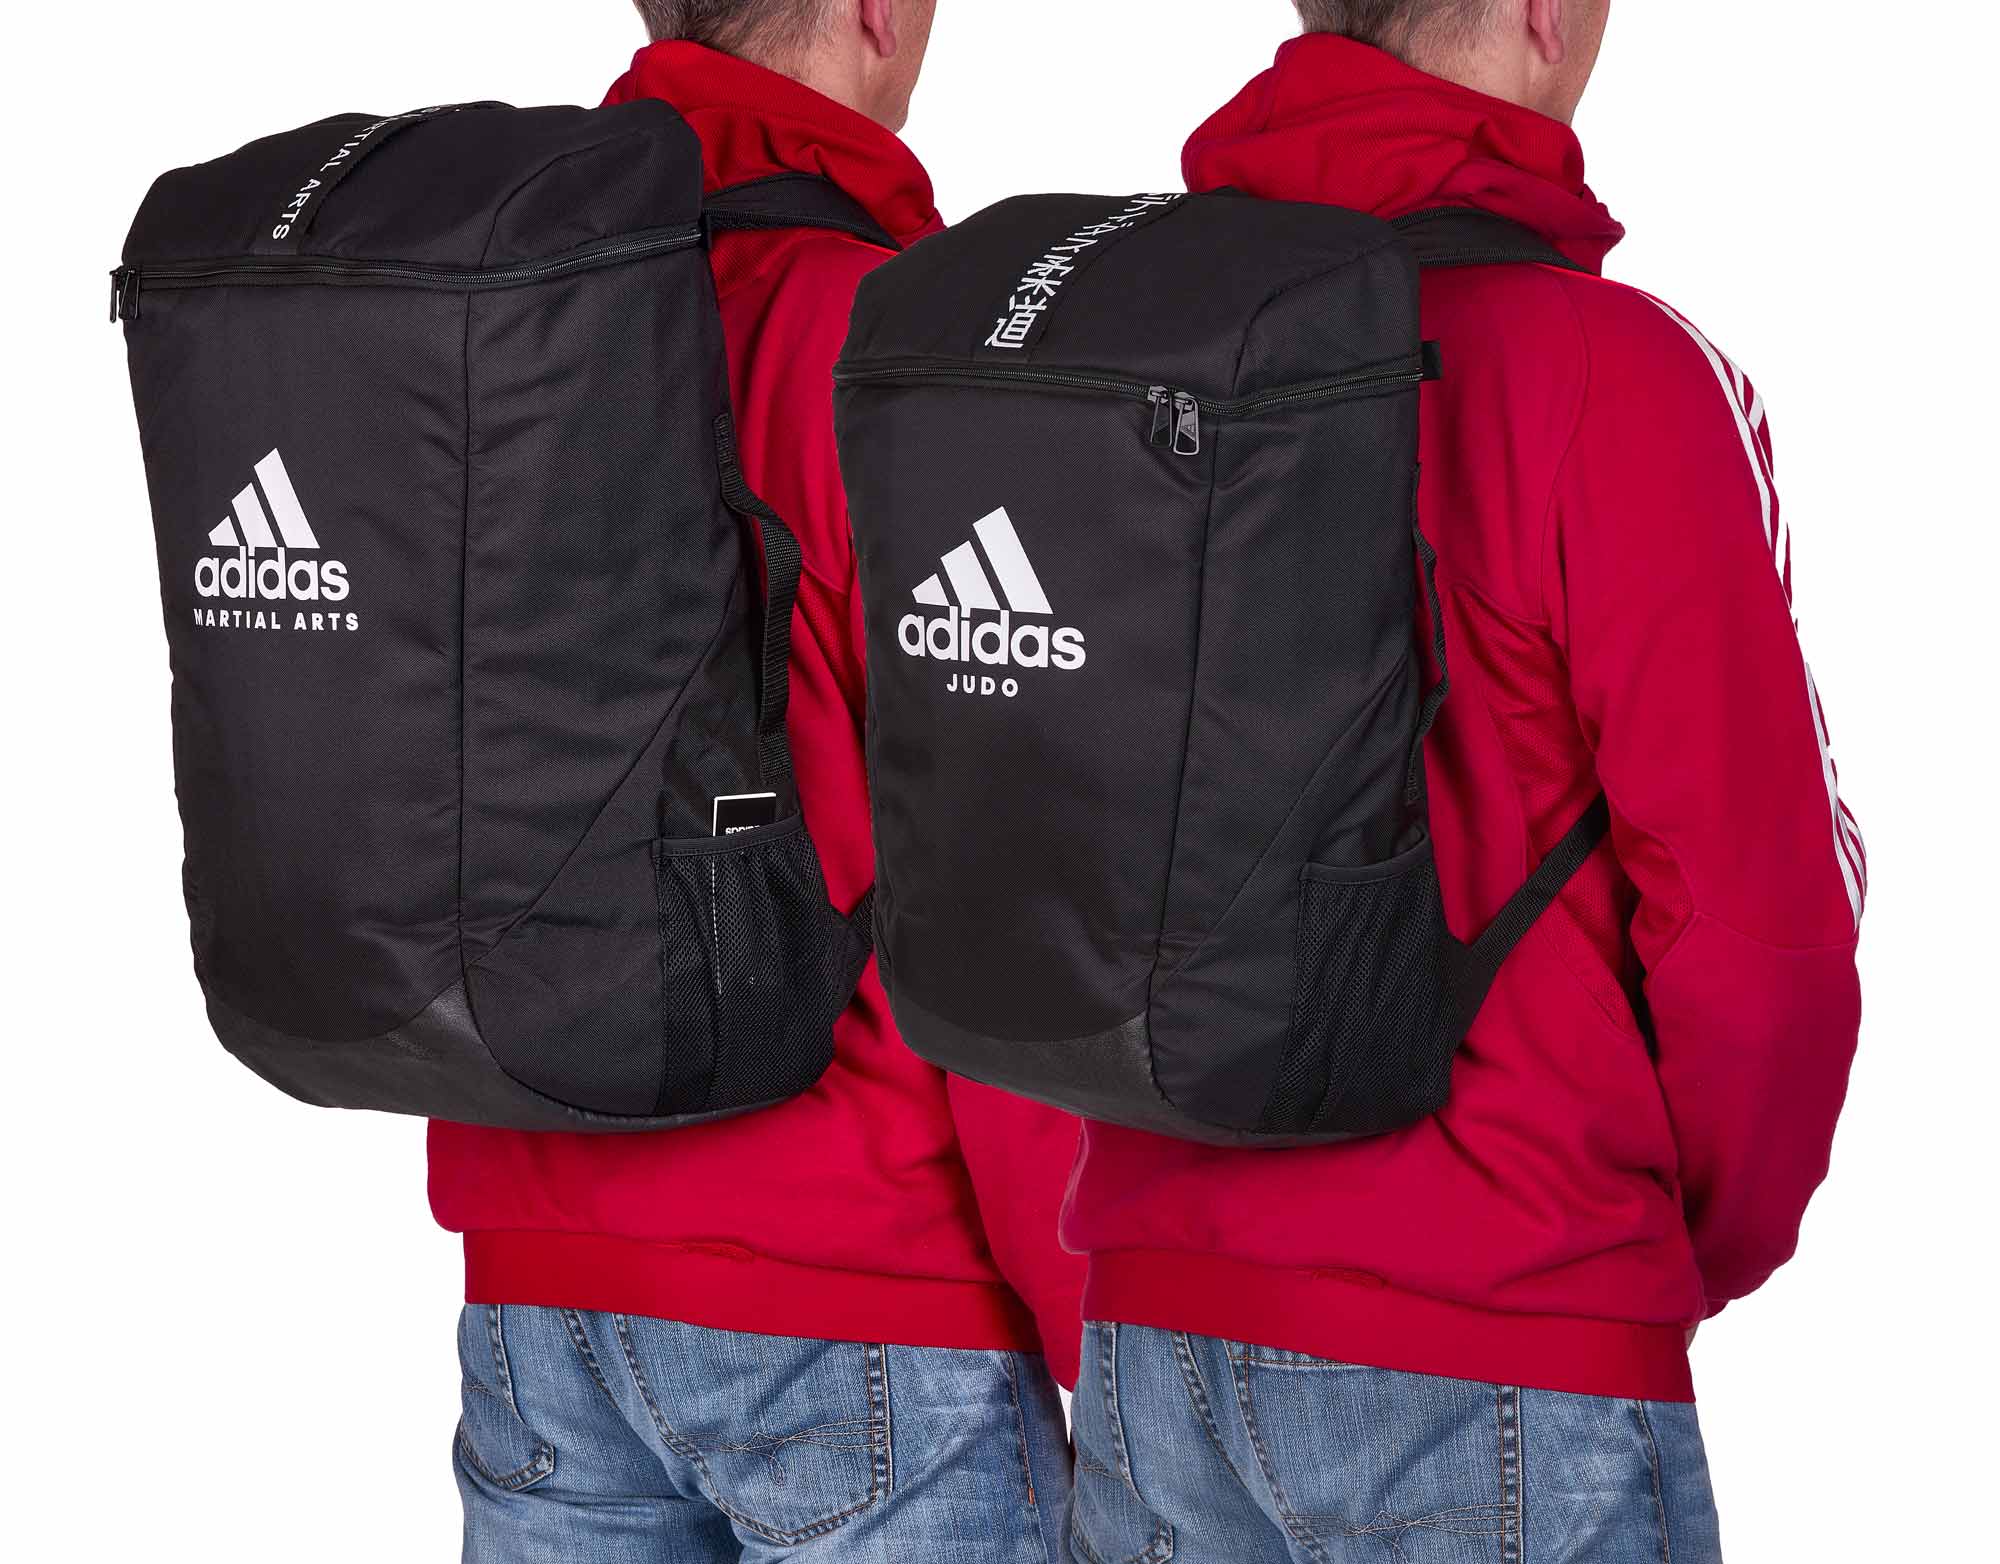 adidas backpack kick boxing adiACC090KB, black/white